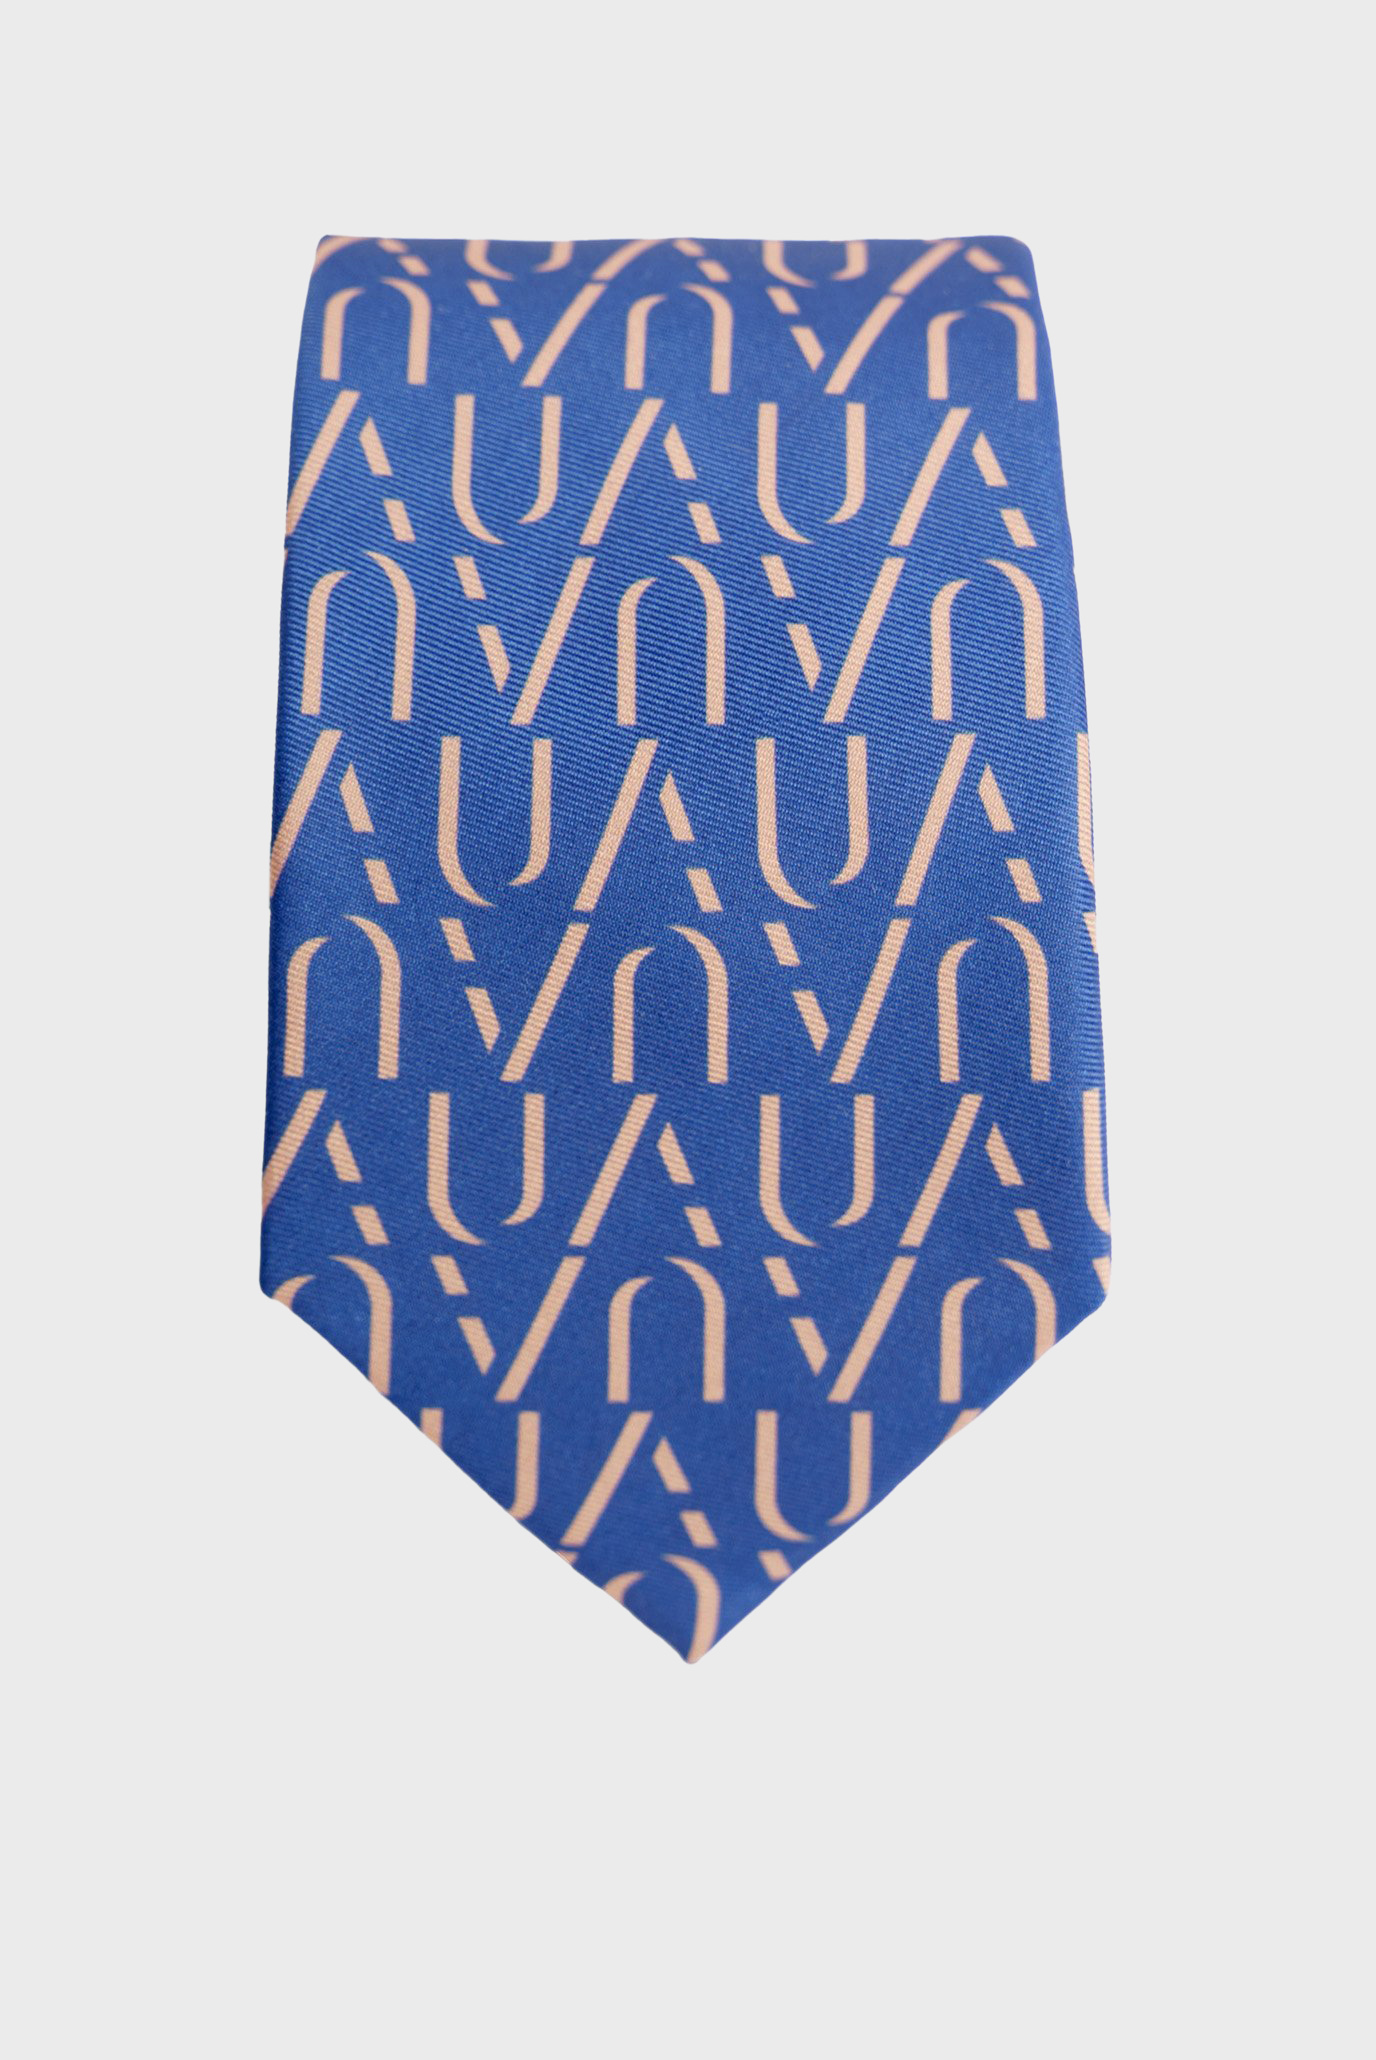 Мужской синий галстук с узором 1